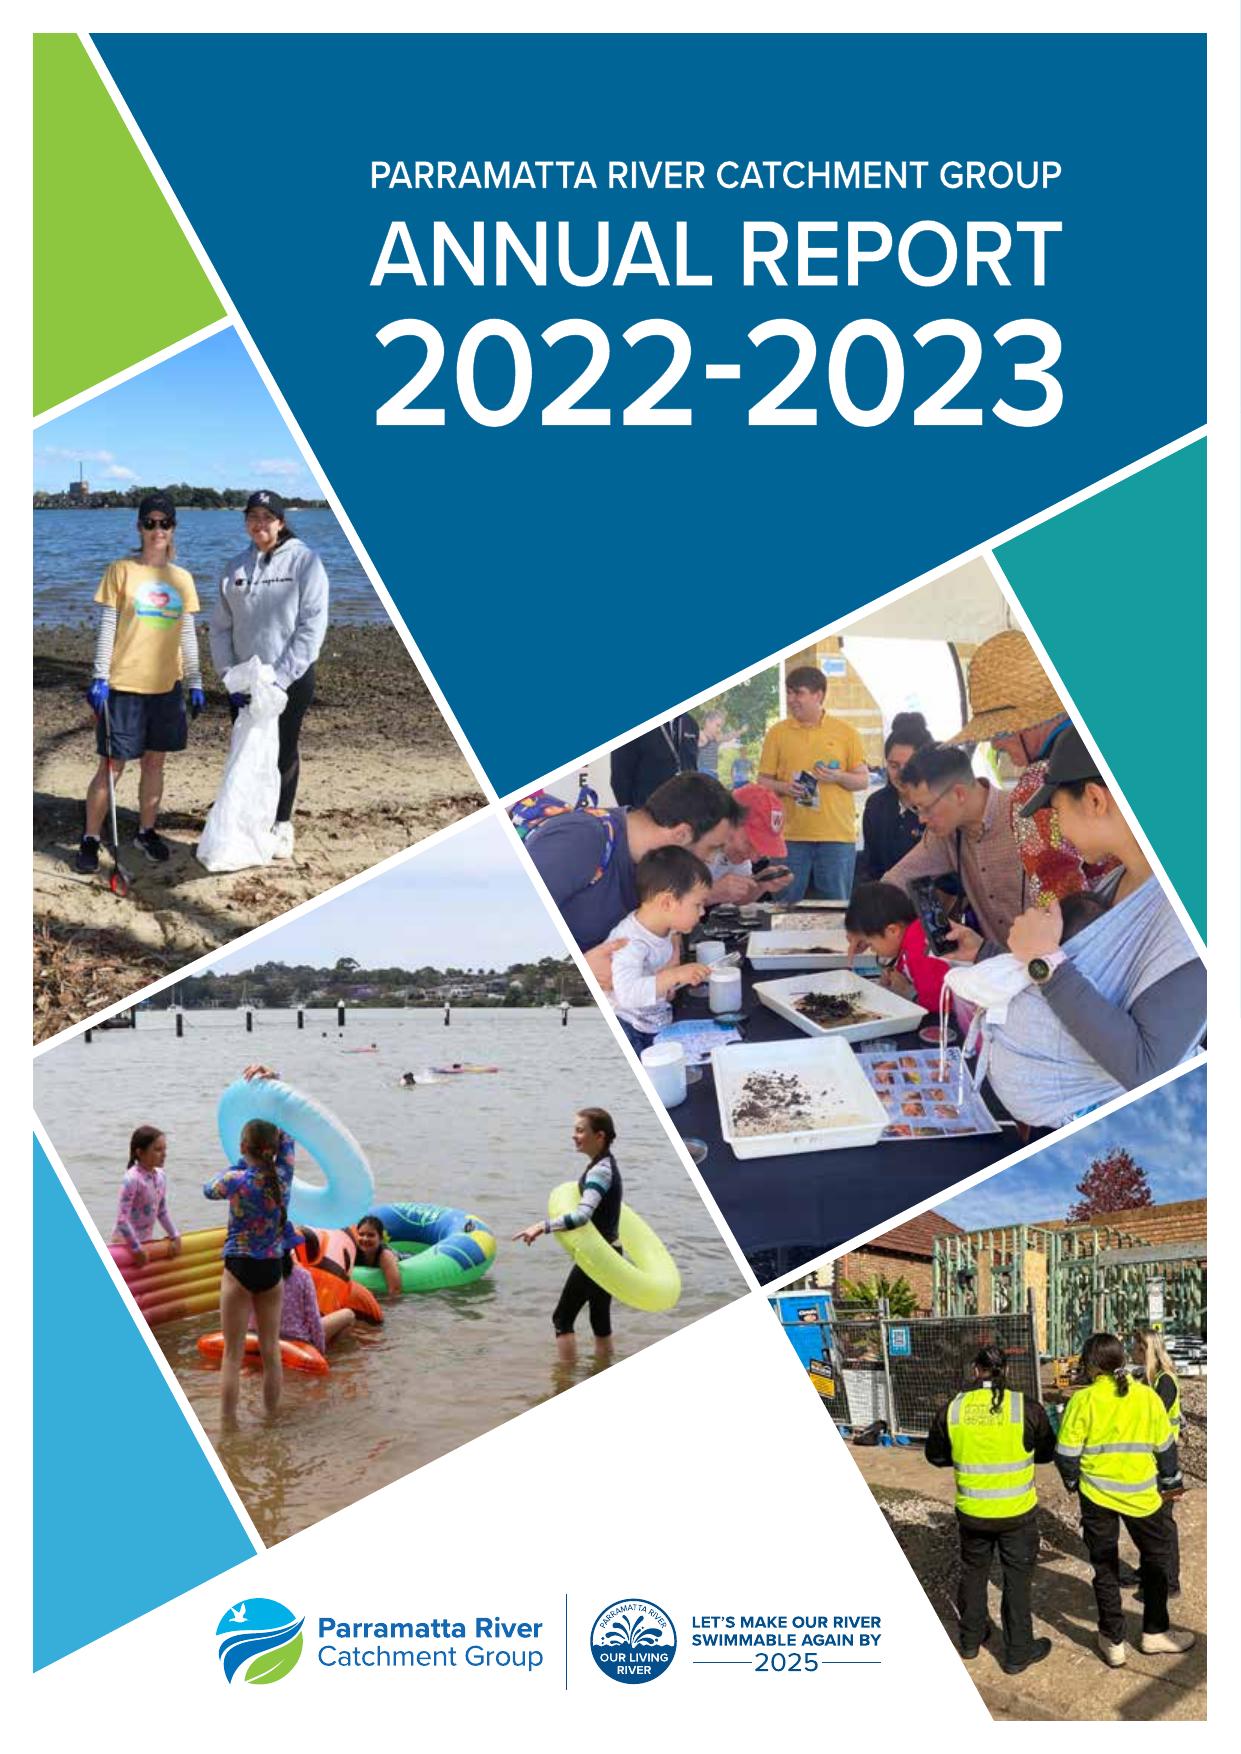 ASAPLAB 2023 Annual Report